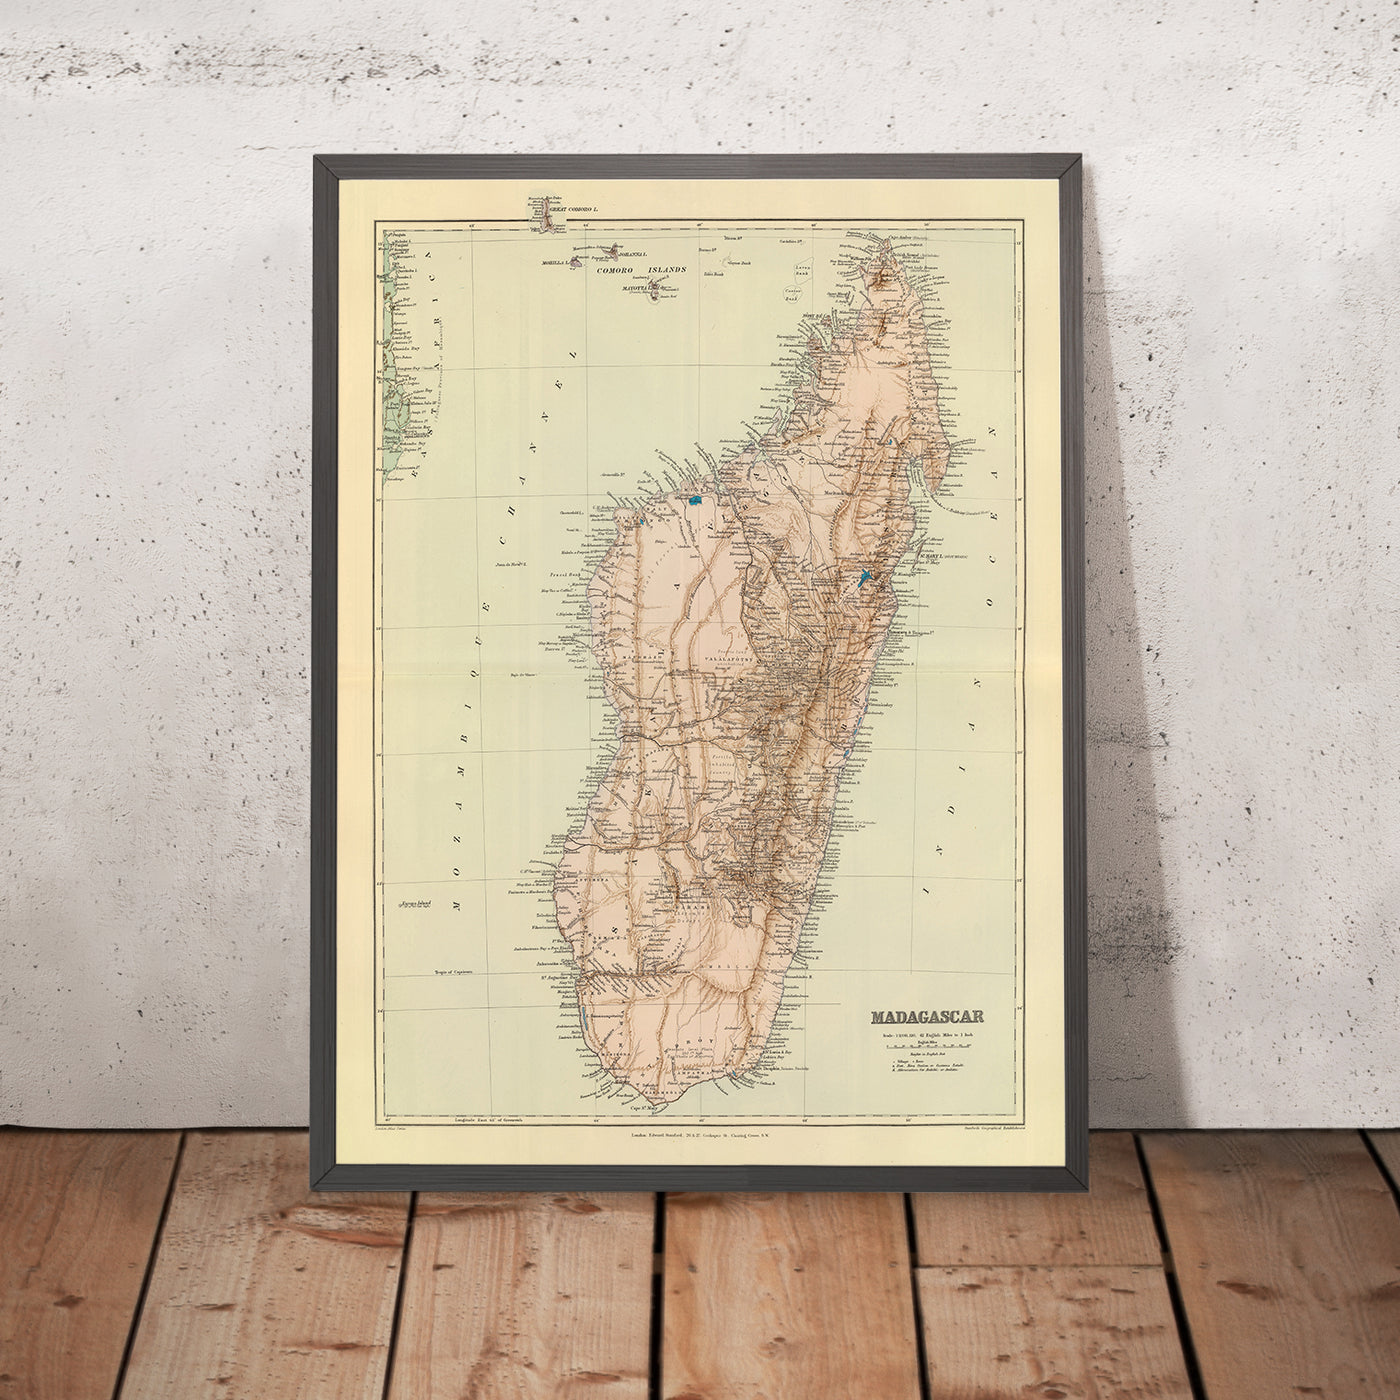 Old Map of Madagascar by Edward Stanford 1901: Antananarivo, Diego Suarez, Tamatave, Majunga, Fort Dauphin